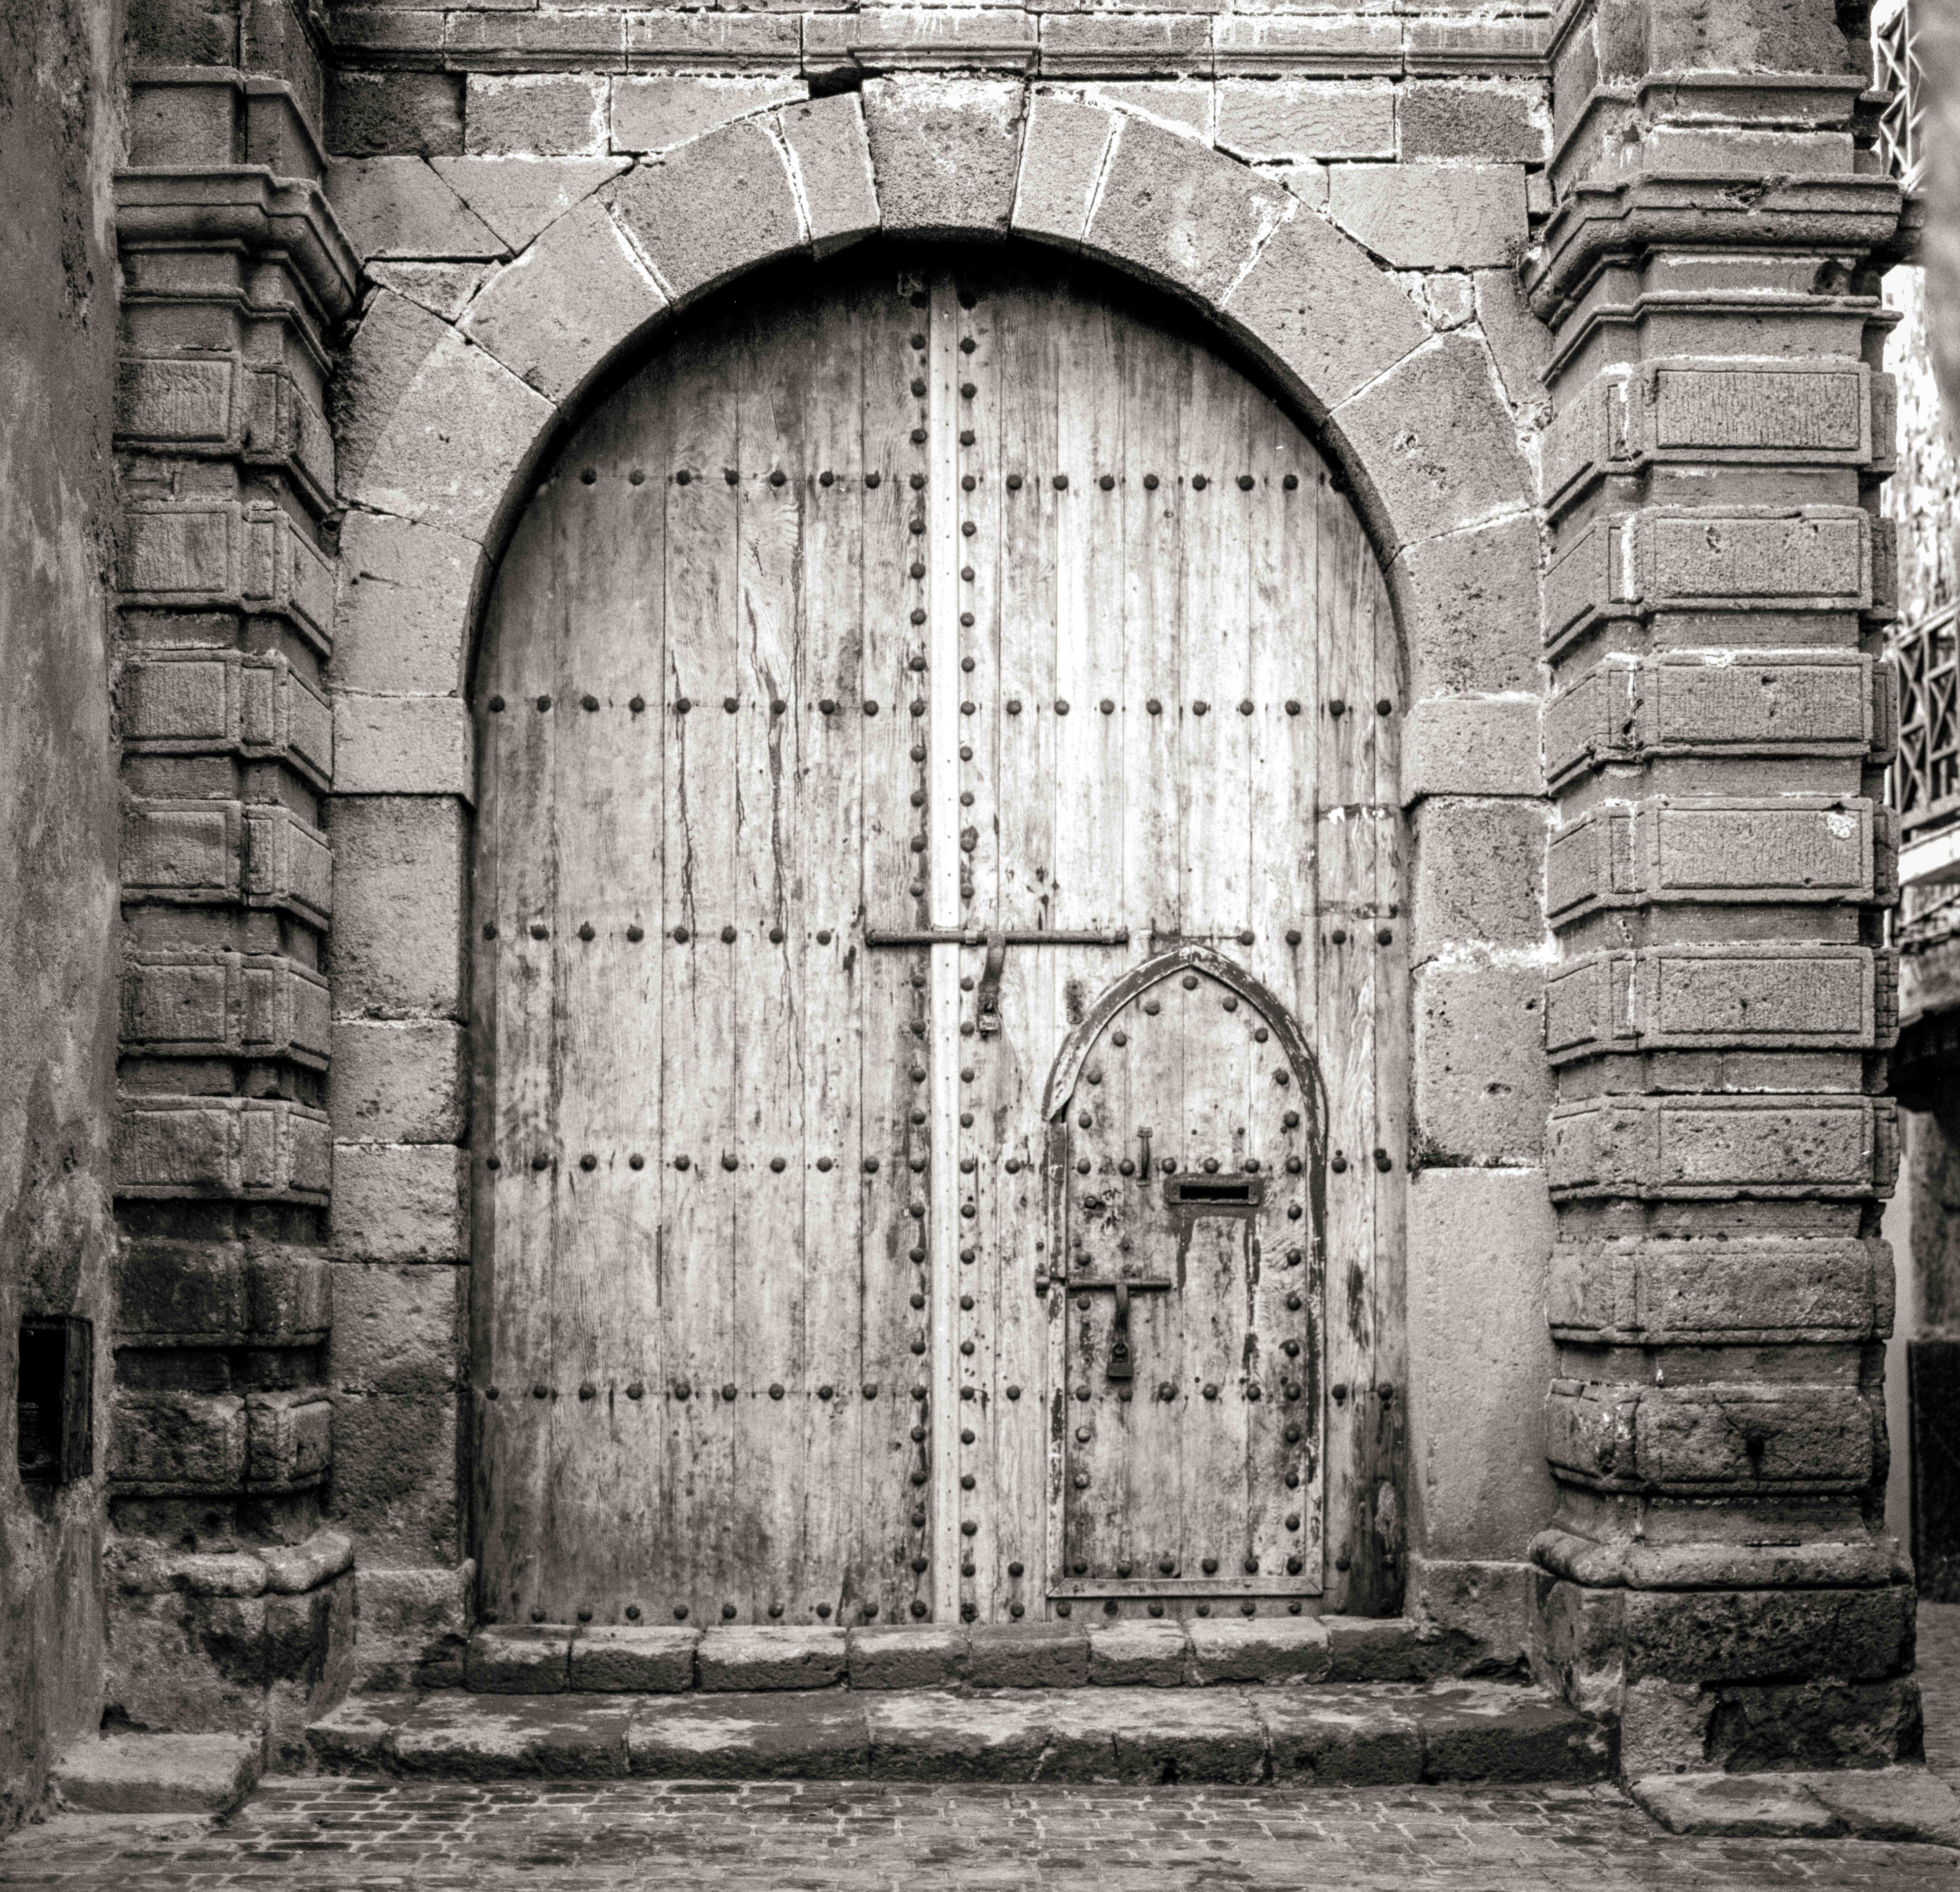 Door in EssaouiraBronica SQA, Ilford FP4+, SUPERGRAIN.